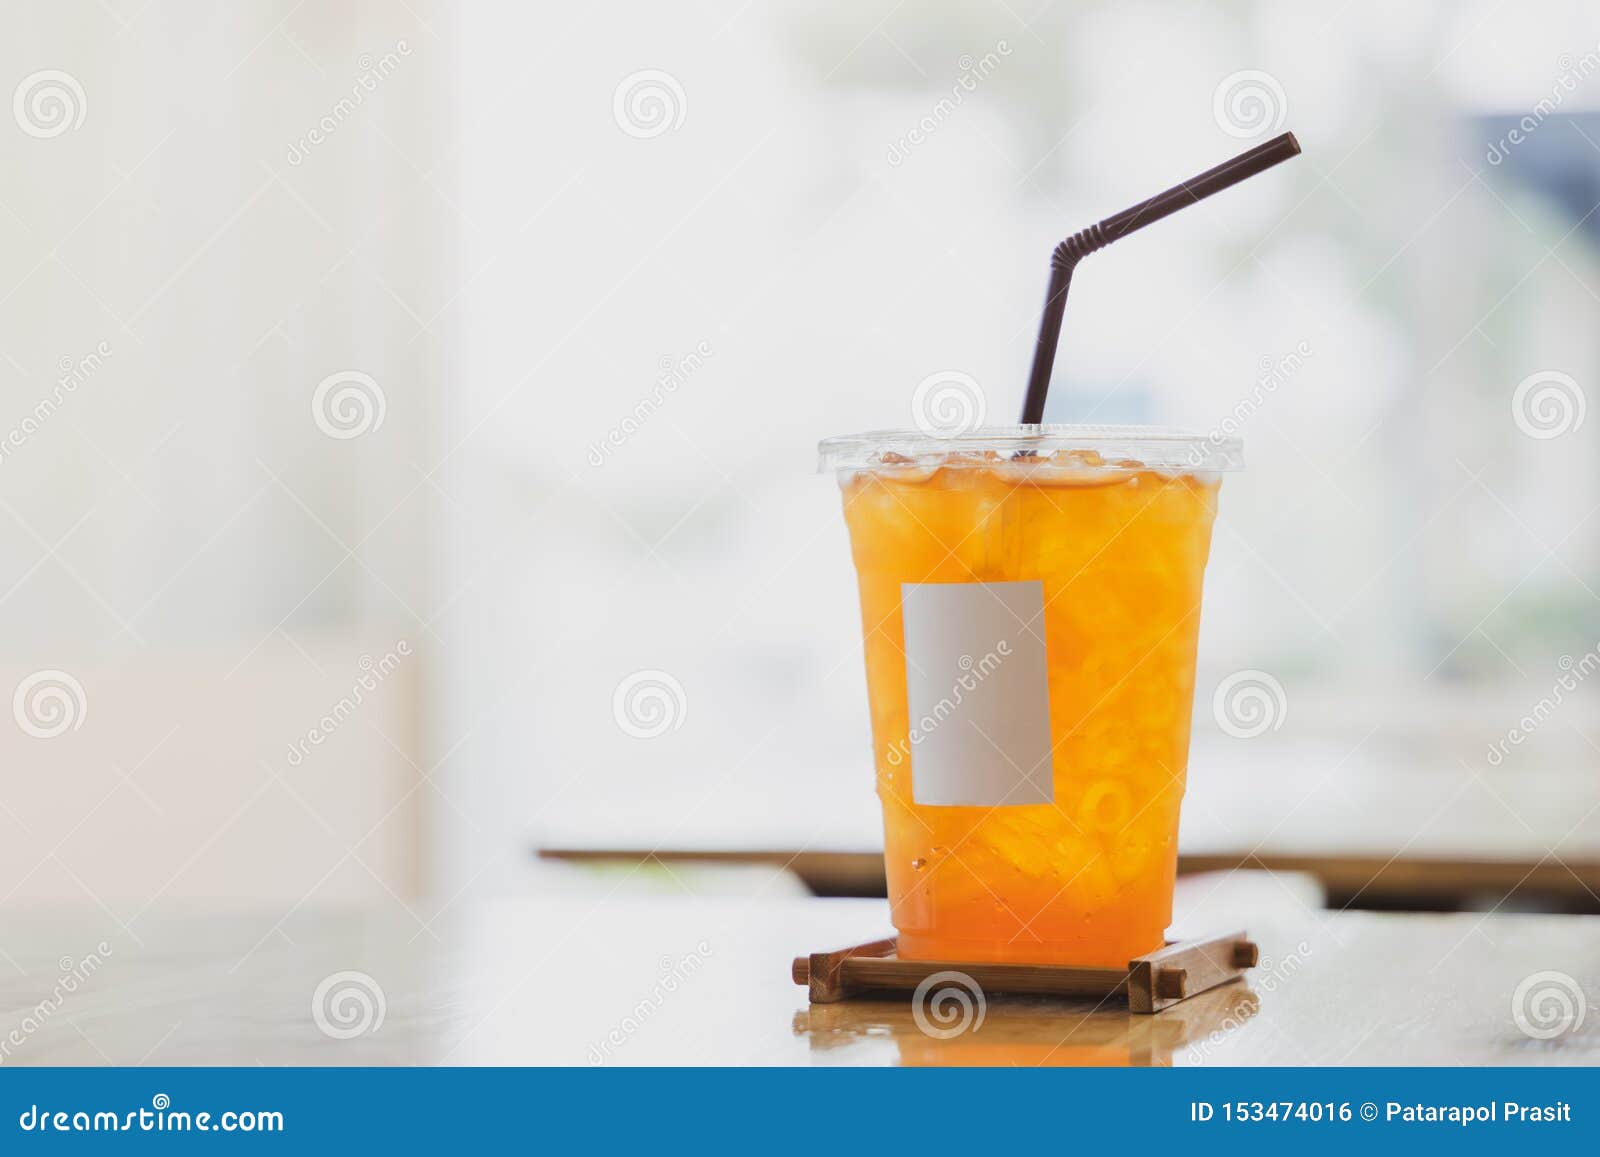 Download Iced Lemon Tea In Plastic Cup Mockup Stock Photo Image Of Full Brown 153474016